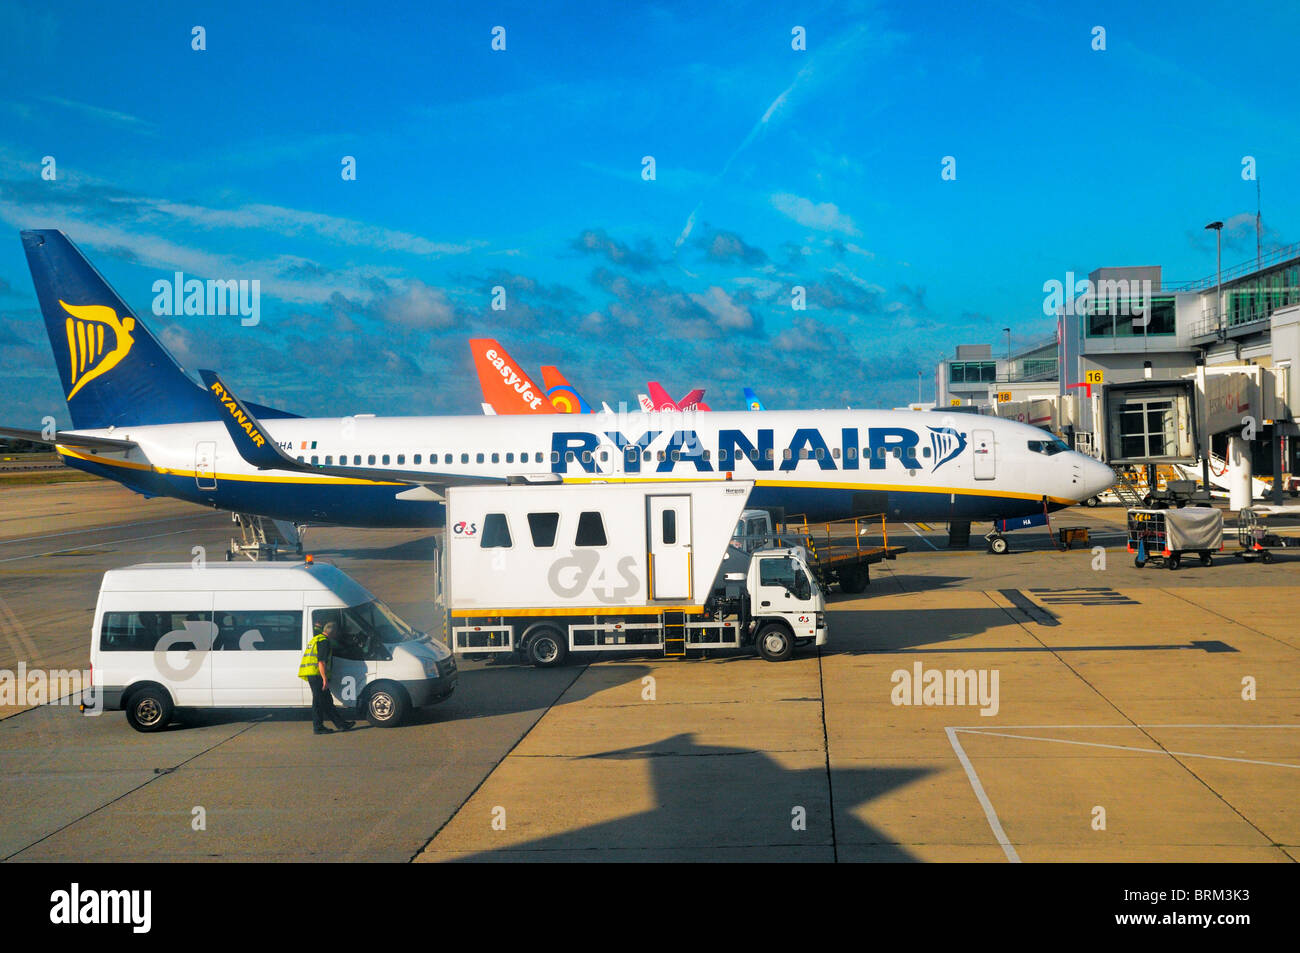 Ryanair plane on airfield at London Gatwick Airport, UK Stock Photo